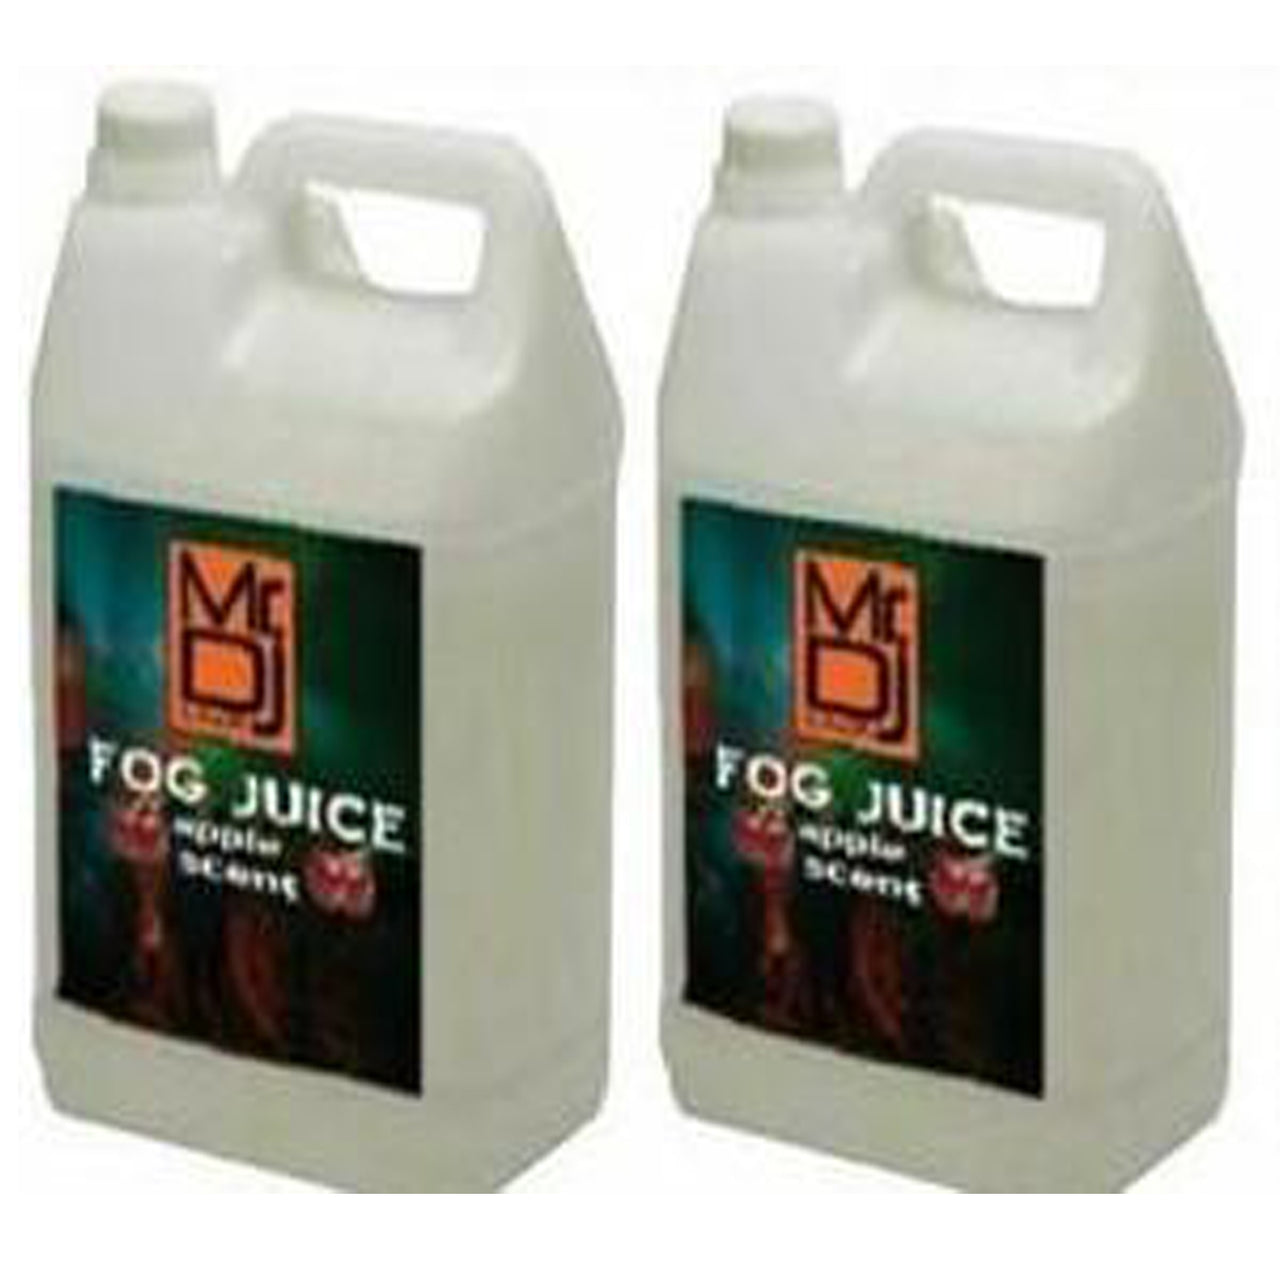 2 MR DJ Gallon Fog/Juice Fluid for Chauvet, ADJ, Machine Fog Juice Fluid Apple Scent Gallons of Fog/Smoke/Haze Machine Refill Liquid Juice Water Based Fog Machine Fluid